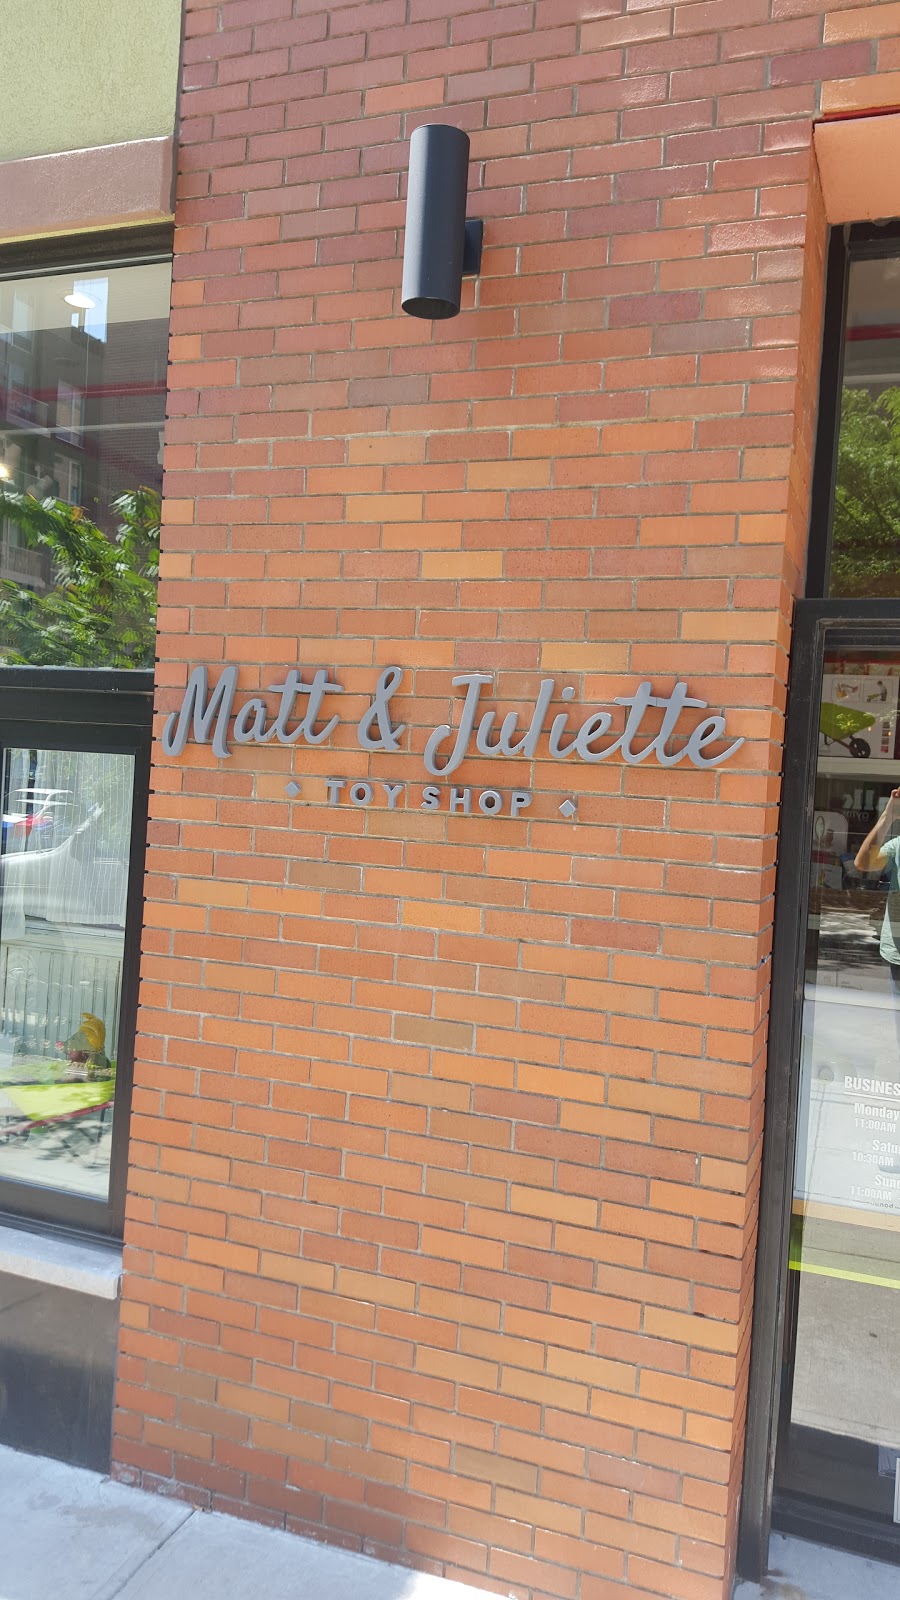 Photo of Matt & Juliette in New York City, New York, United States - 10 Picture of Point of interest, Establishment, Store